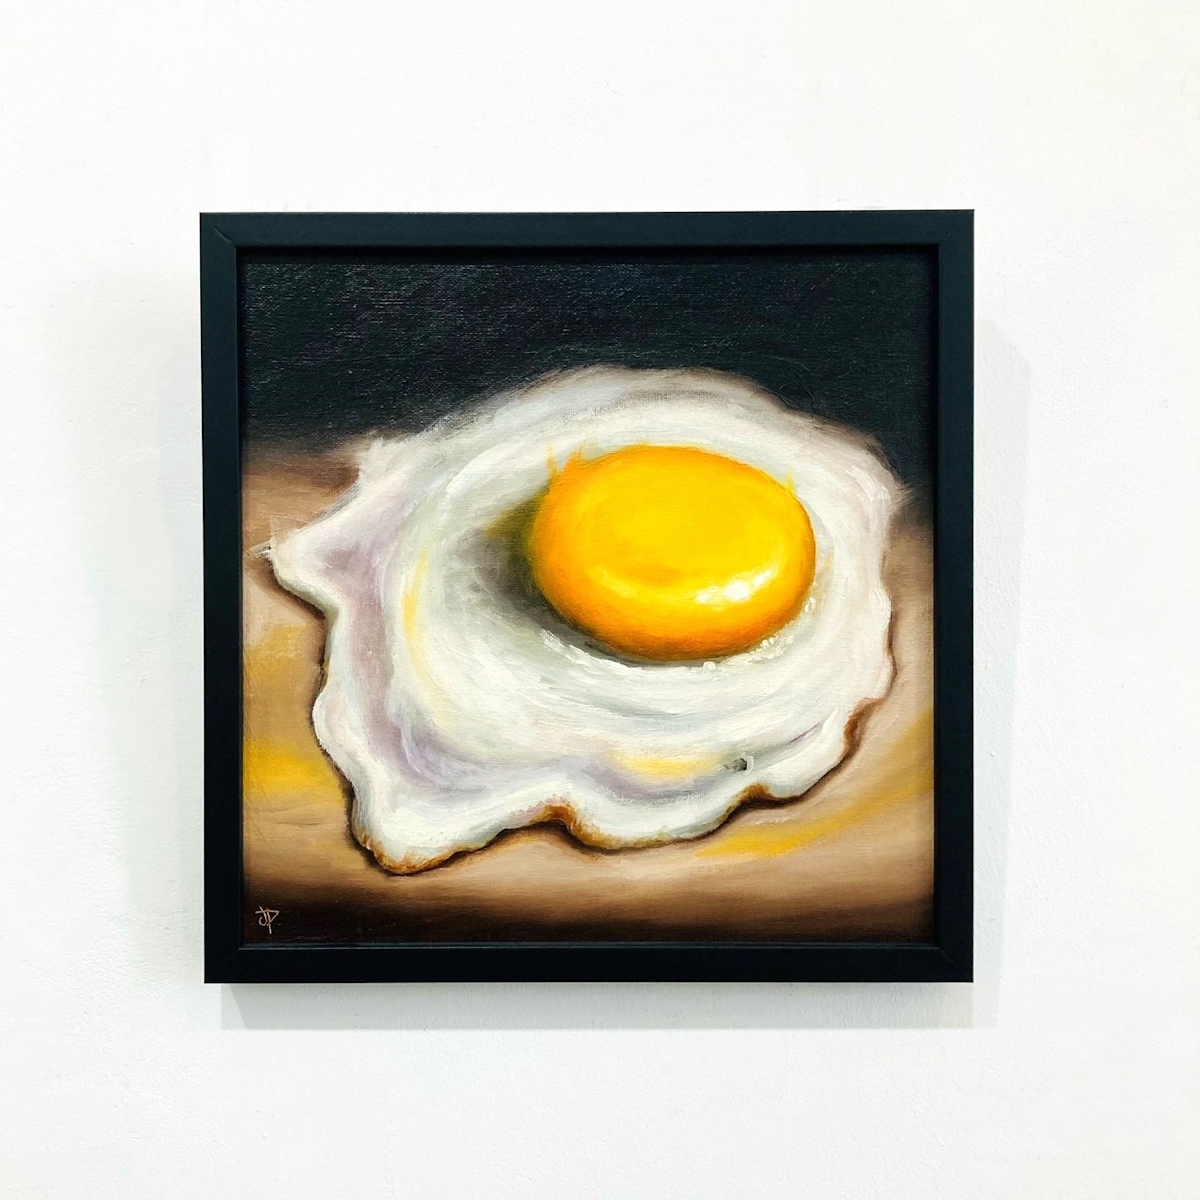 'Big Fried Egg' by artist Jane Palmer